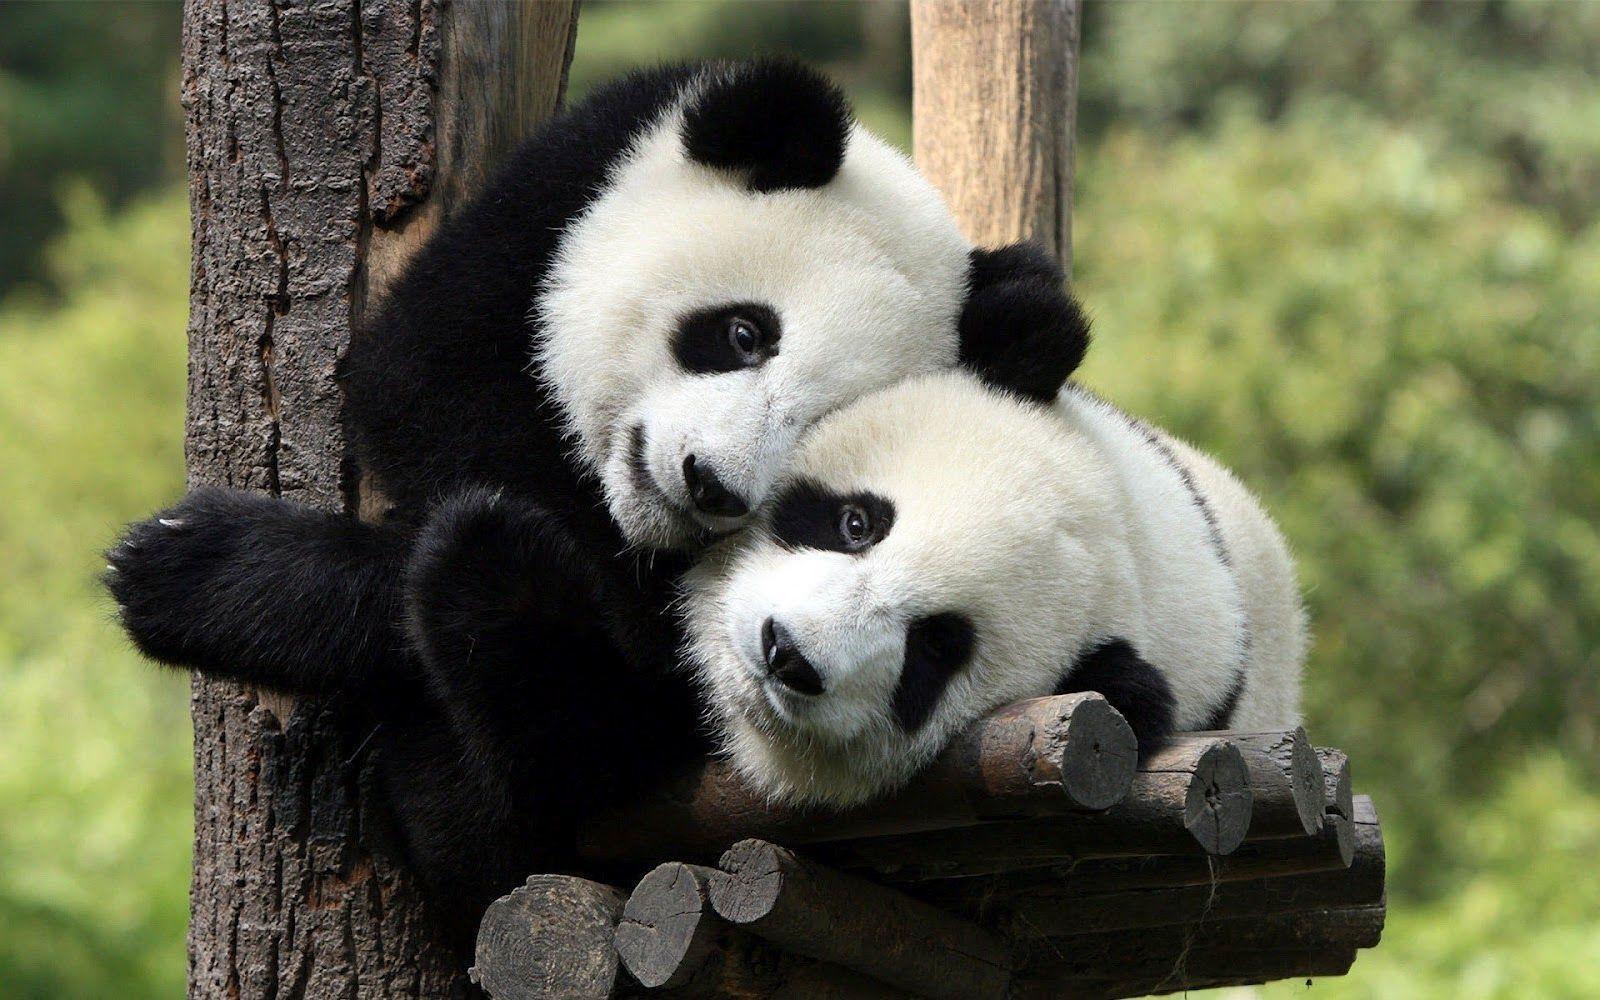 AmazingPict.com. Two Panda Bears Wallpaper for Background